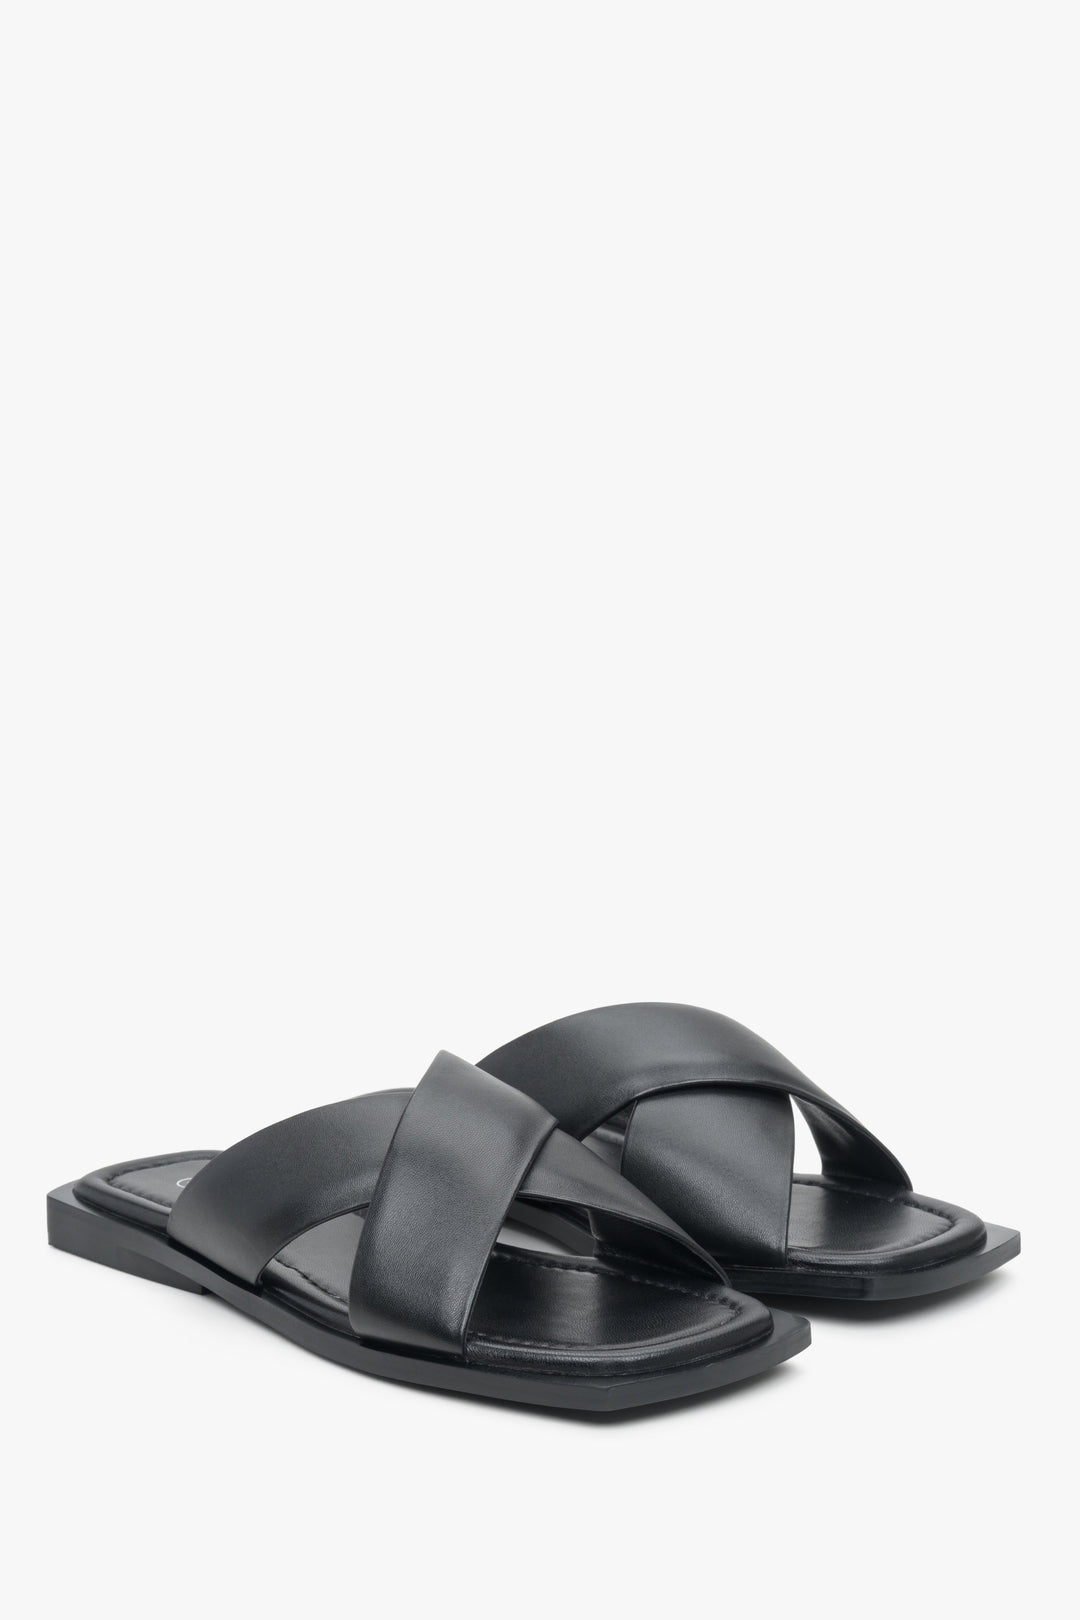 Women's black flat slide sandals made of genuine leather, Estro brand.